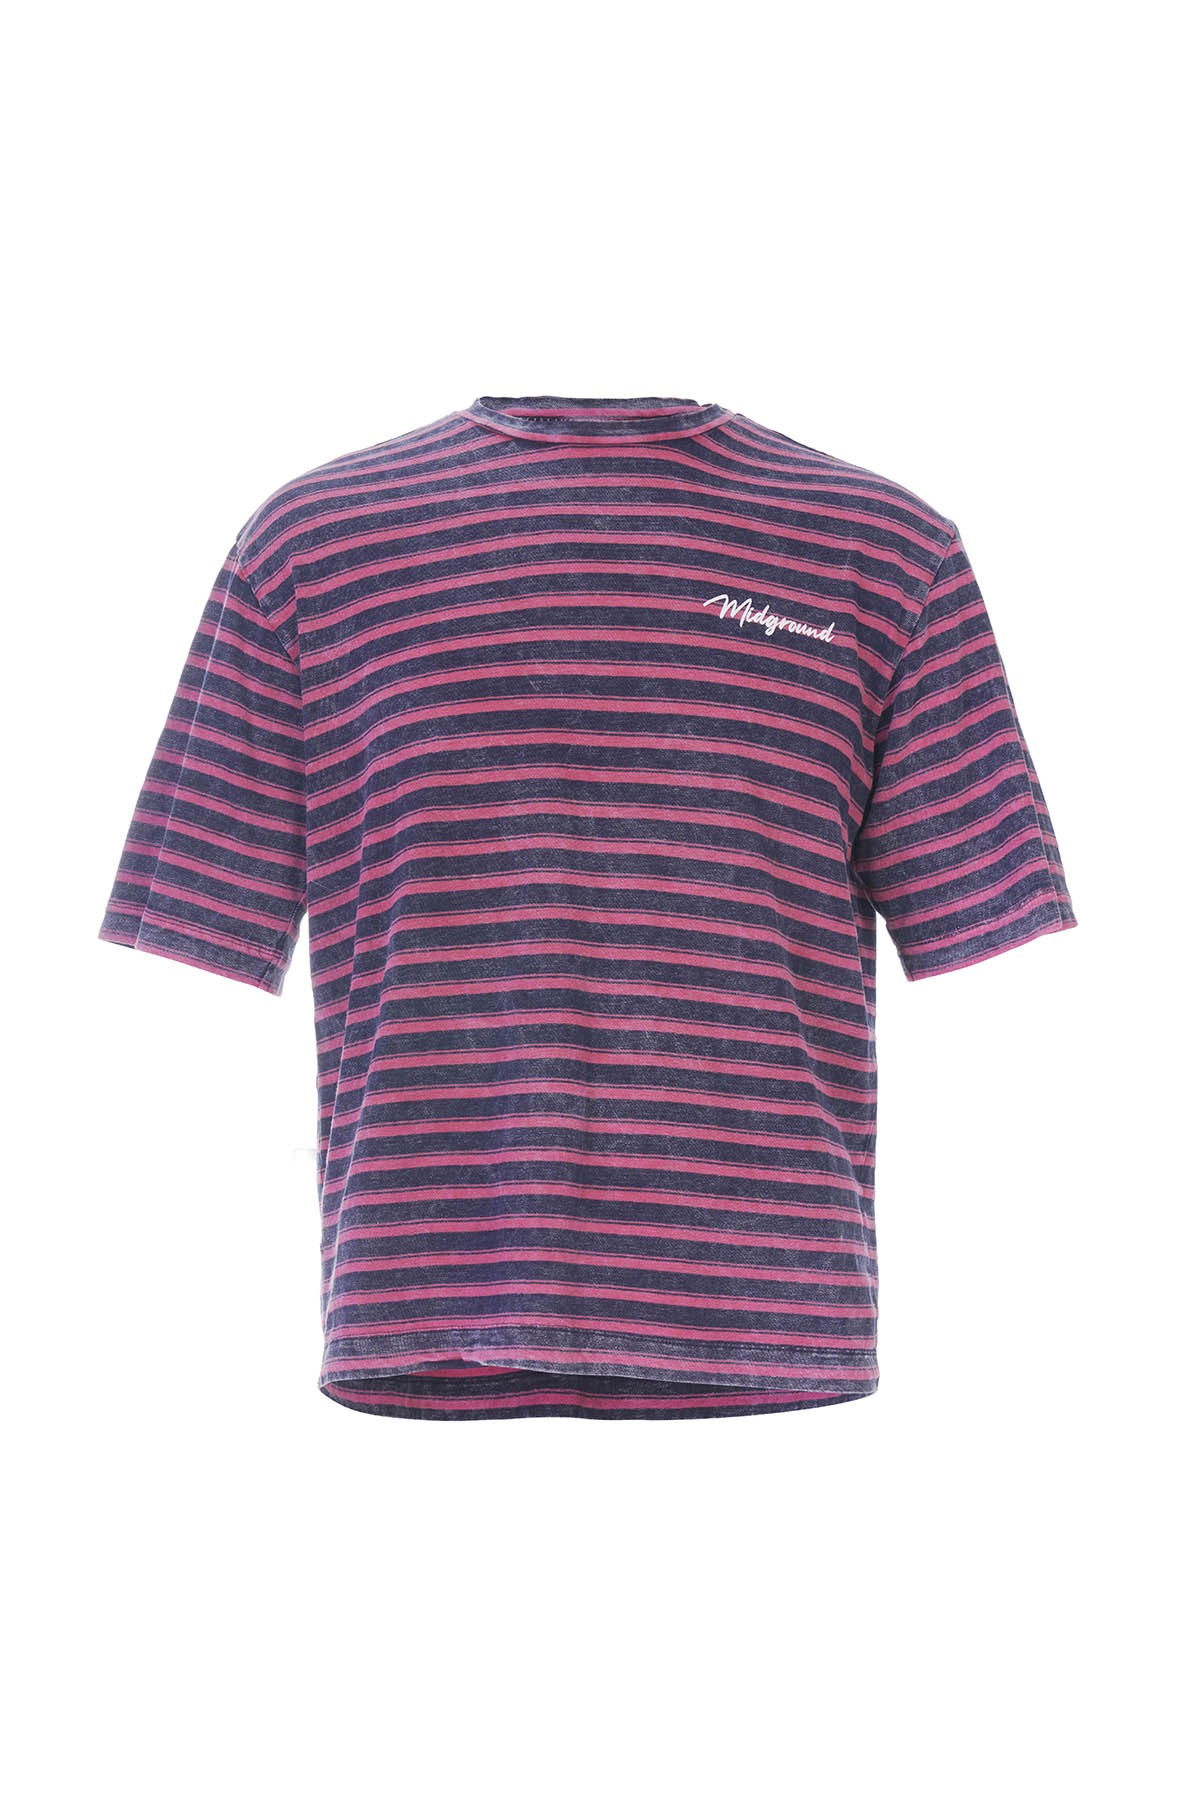 Drop #M157-C/2 Indigo Striped  Tshirt - Kırmızı